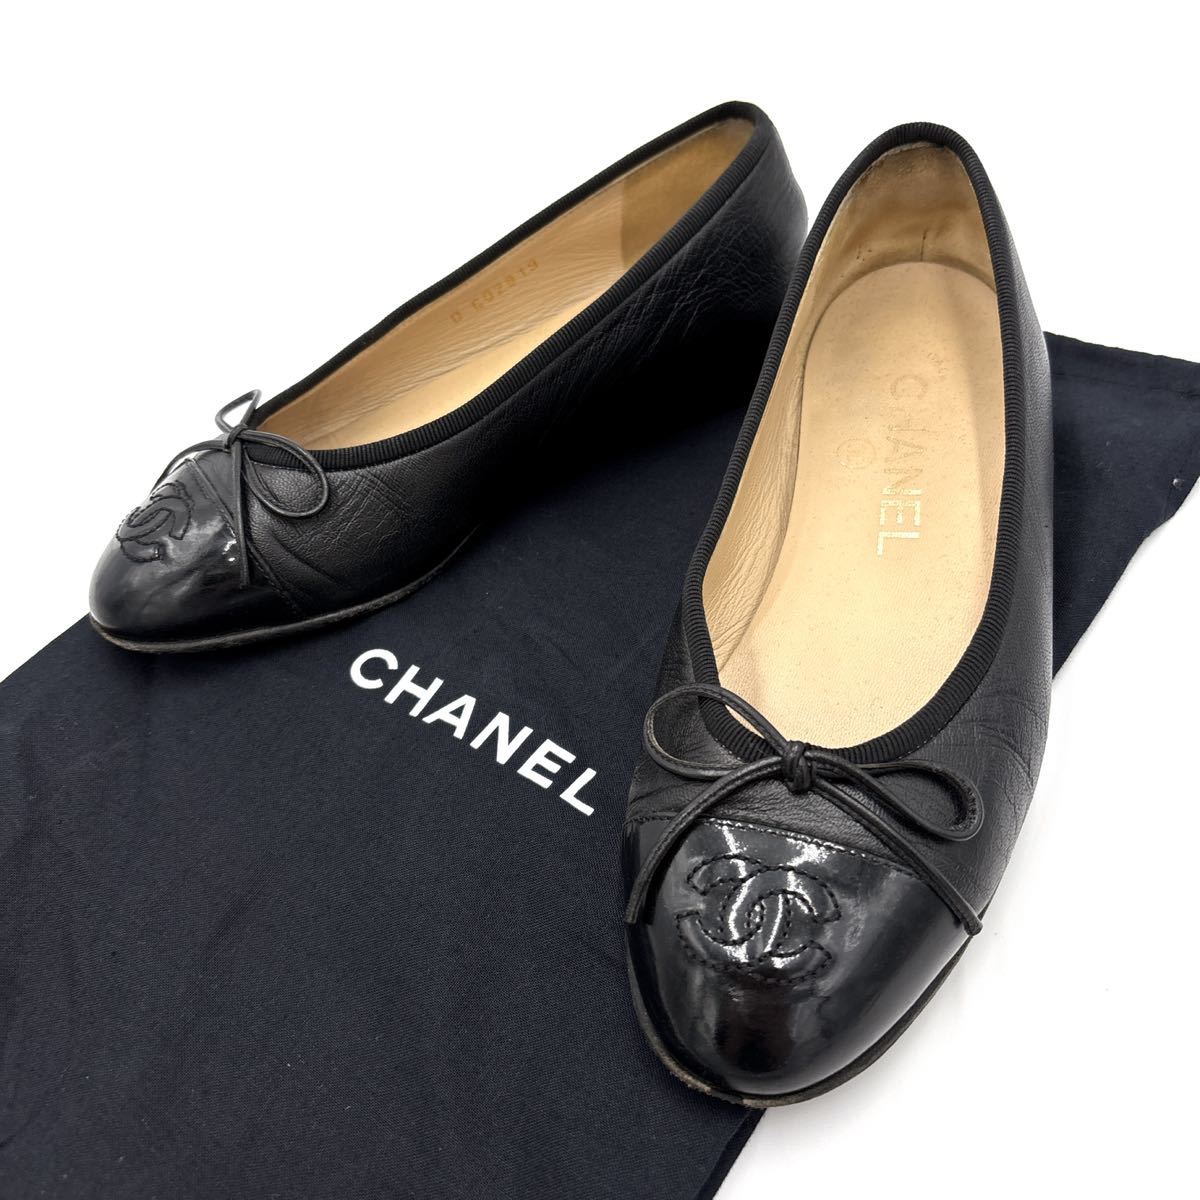 K ＊ 良品 保存袋付き イタリア製 '至高の逸品' シャネル CHANEL ココマーク 本革 リボン装飾 フラット パンプス 34C 21cm 高級婦人靴 _画像1